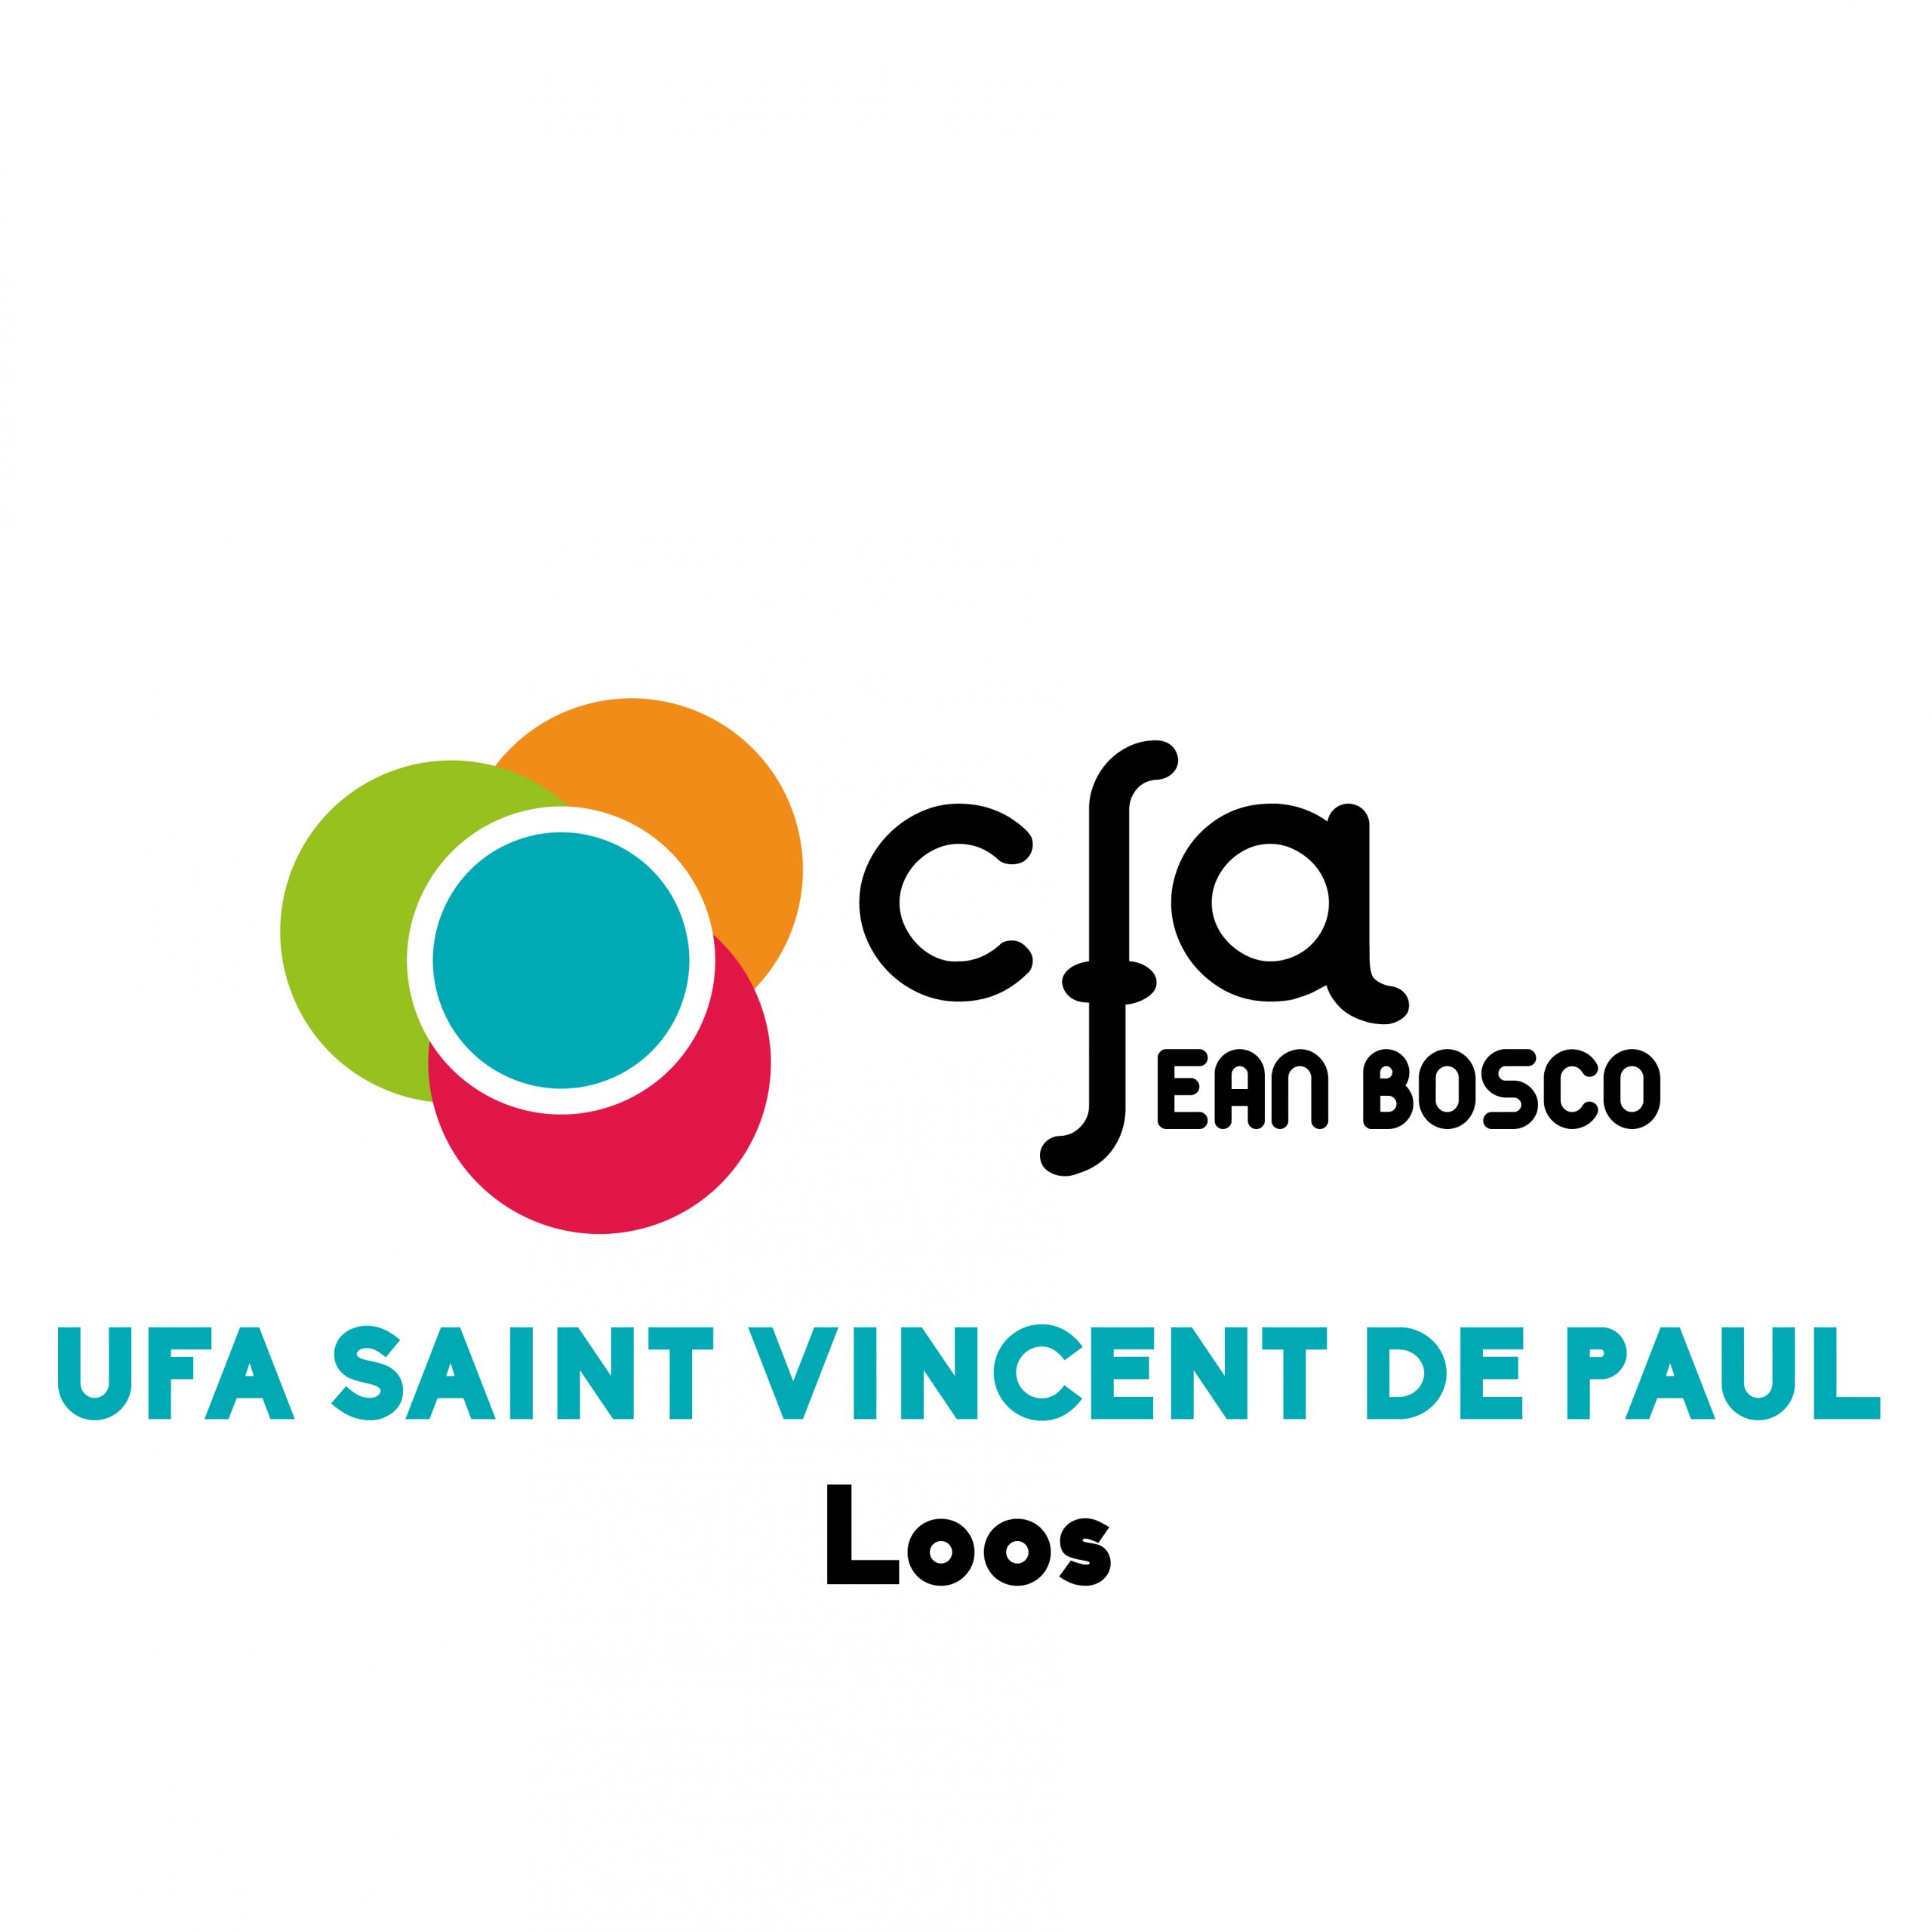 UFA SAINT VINCENT DE PAUL Loos